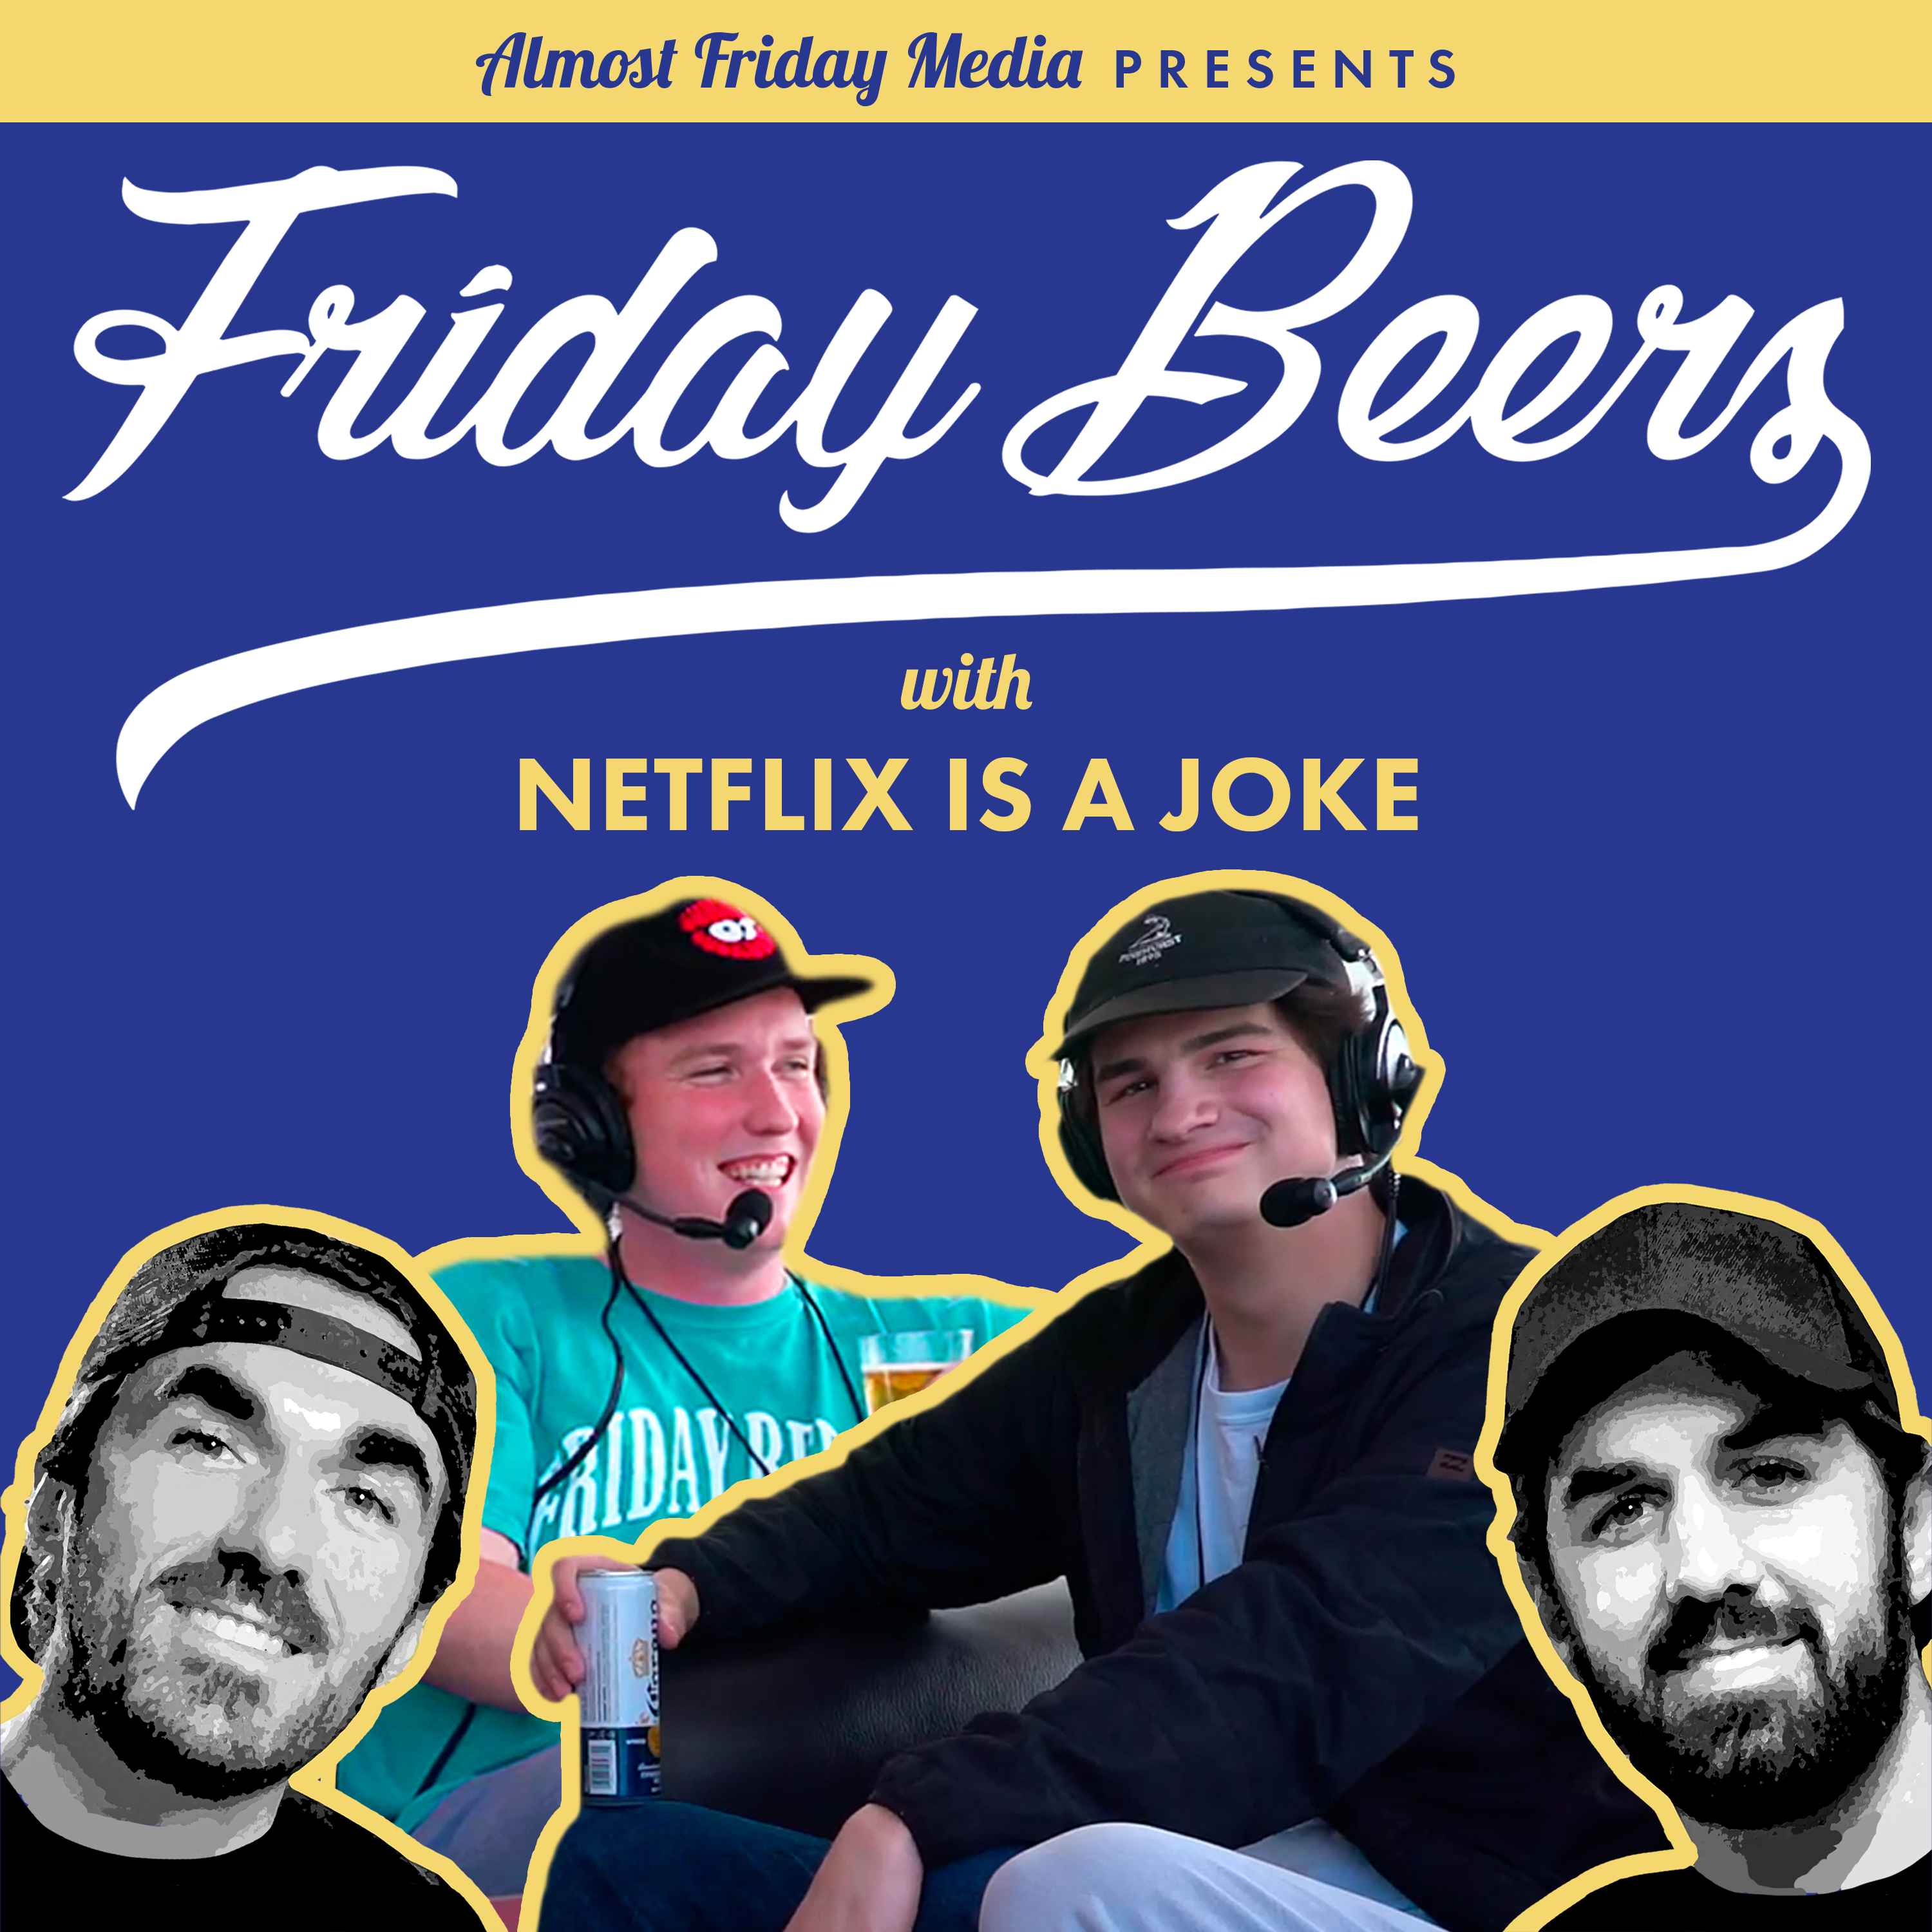 Netflix Is A Joke Fest: Friday Beers' Comedic Journey